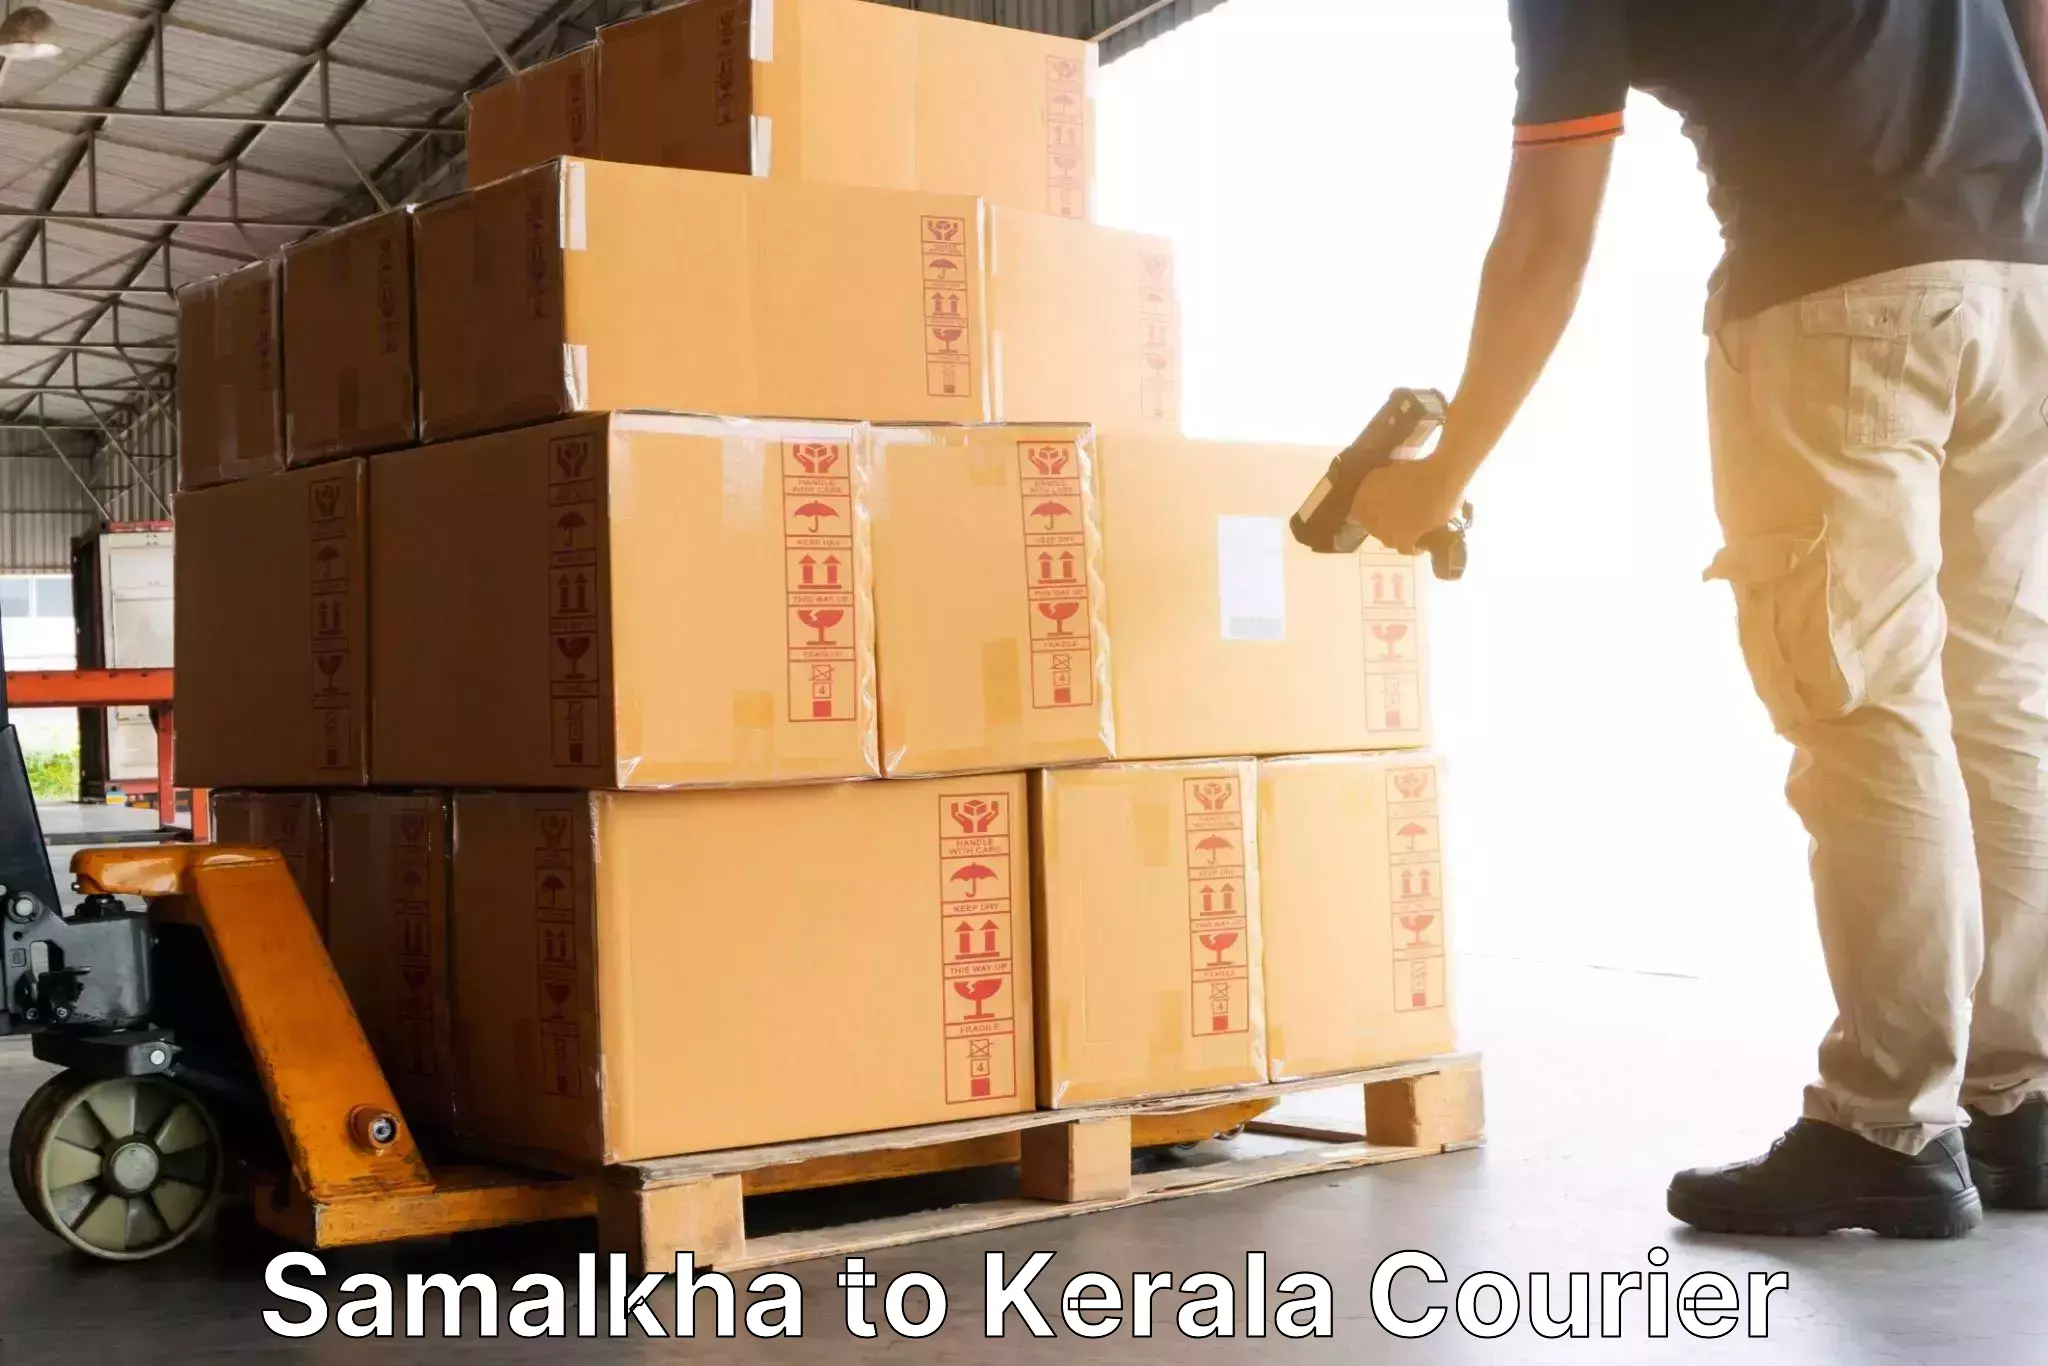 24/7 courier service Samalkha to Cochin Port Kochi